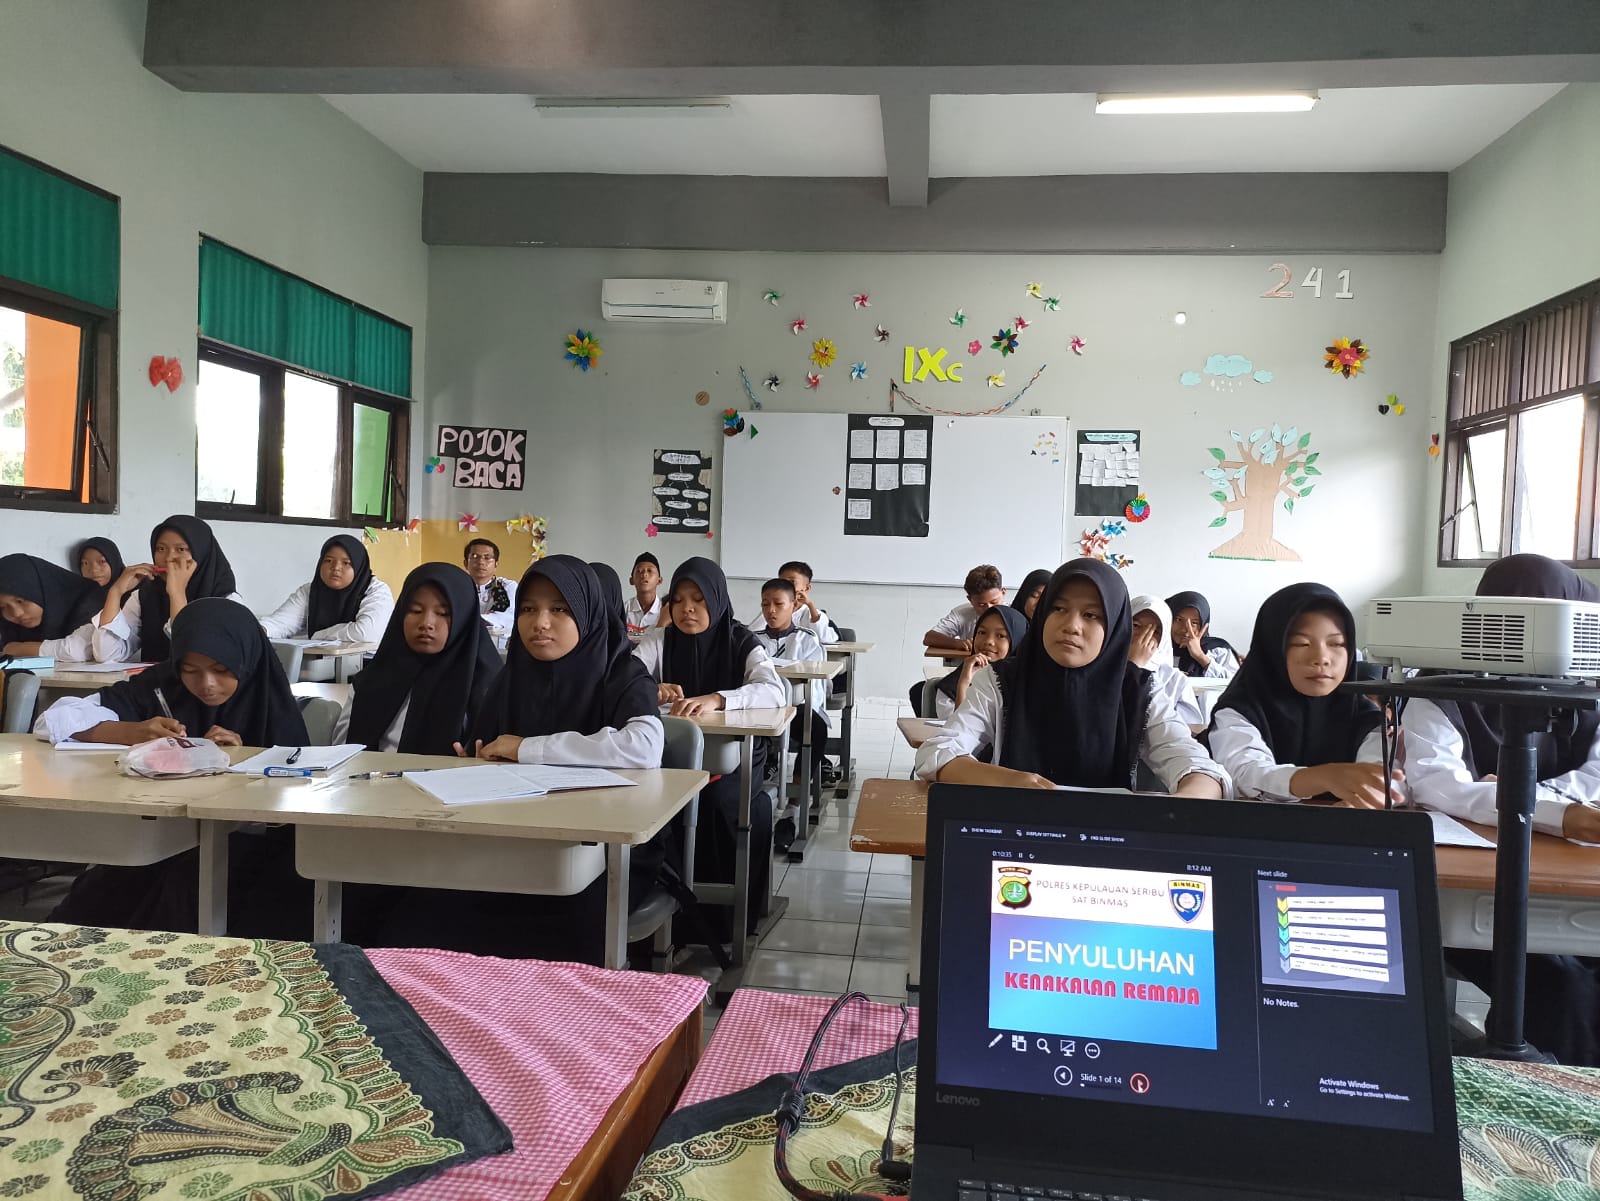 Bhabinkamtibmas Pulau Tidung Berikan Edukasi dan Penyuluhan tentang Kenakalan Remaja kepada Siswa/Siswi SMPN 241 Jakarta di Tahun Ajaran Baru